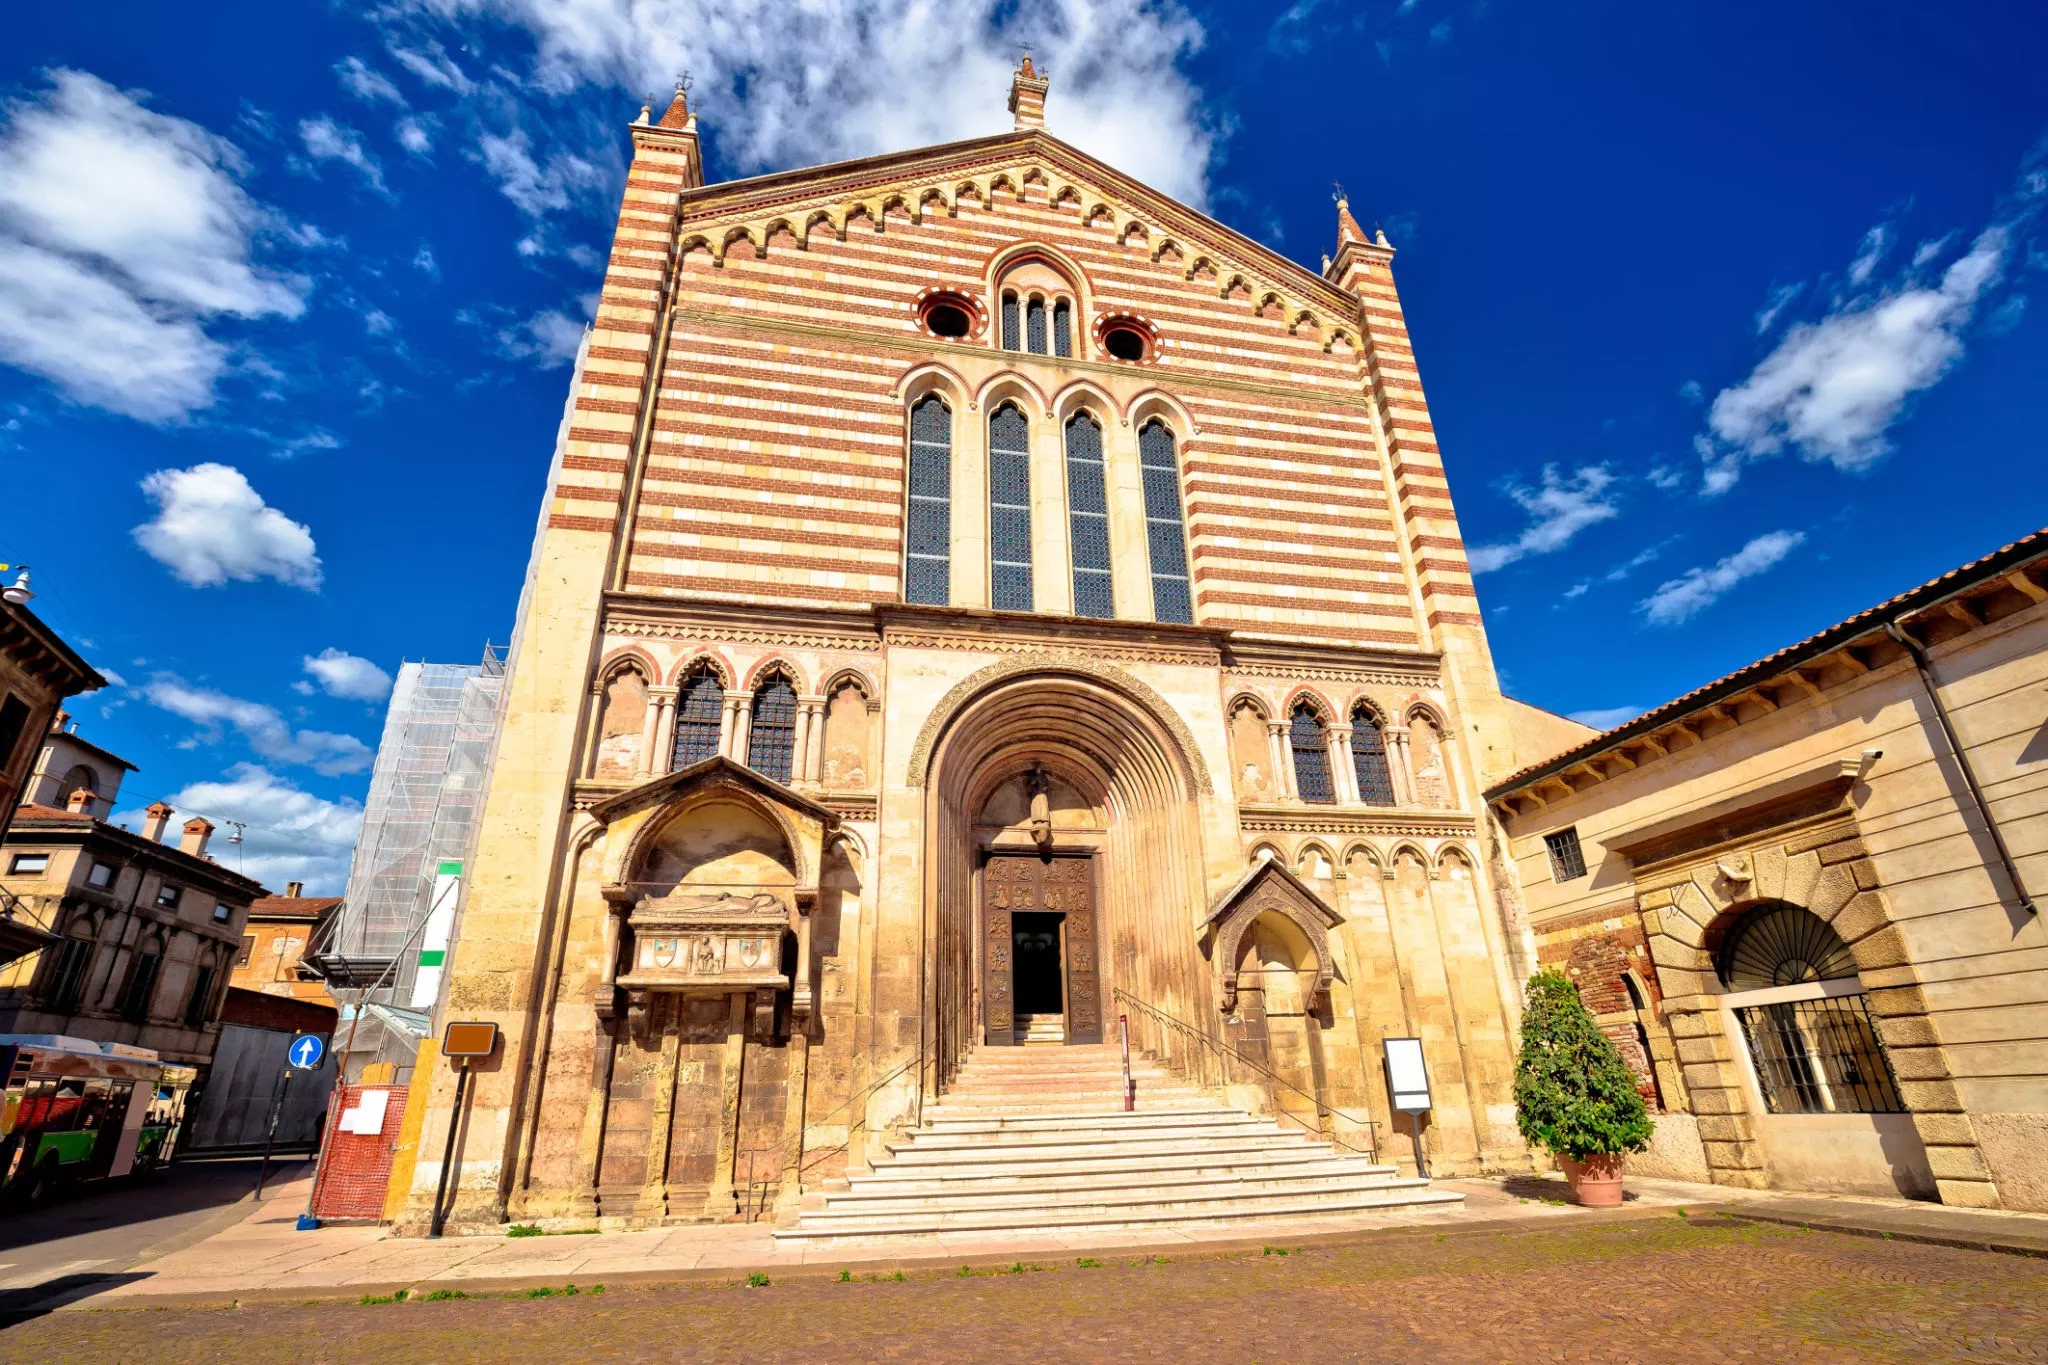 San Fermo Maggiore in Italy, Europe | Architecture - Rated 3.7